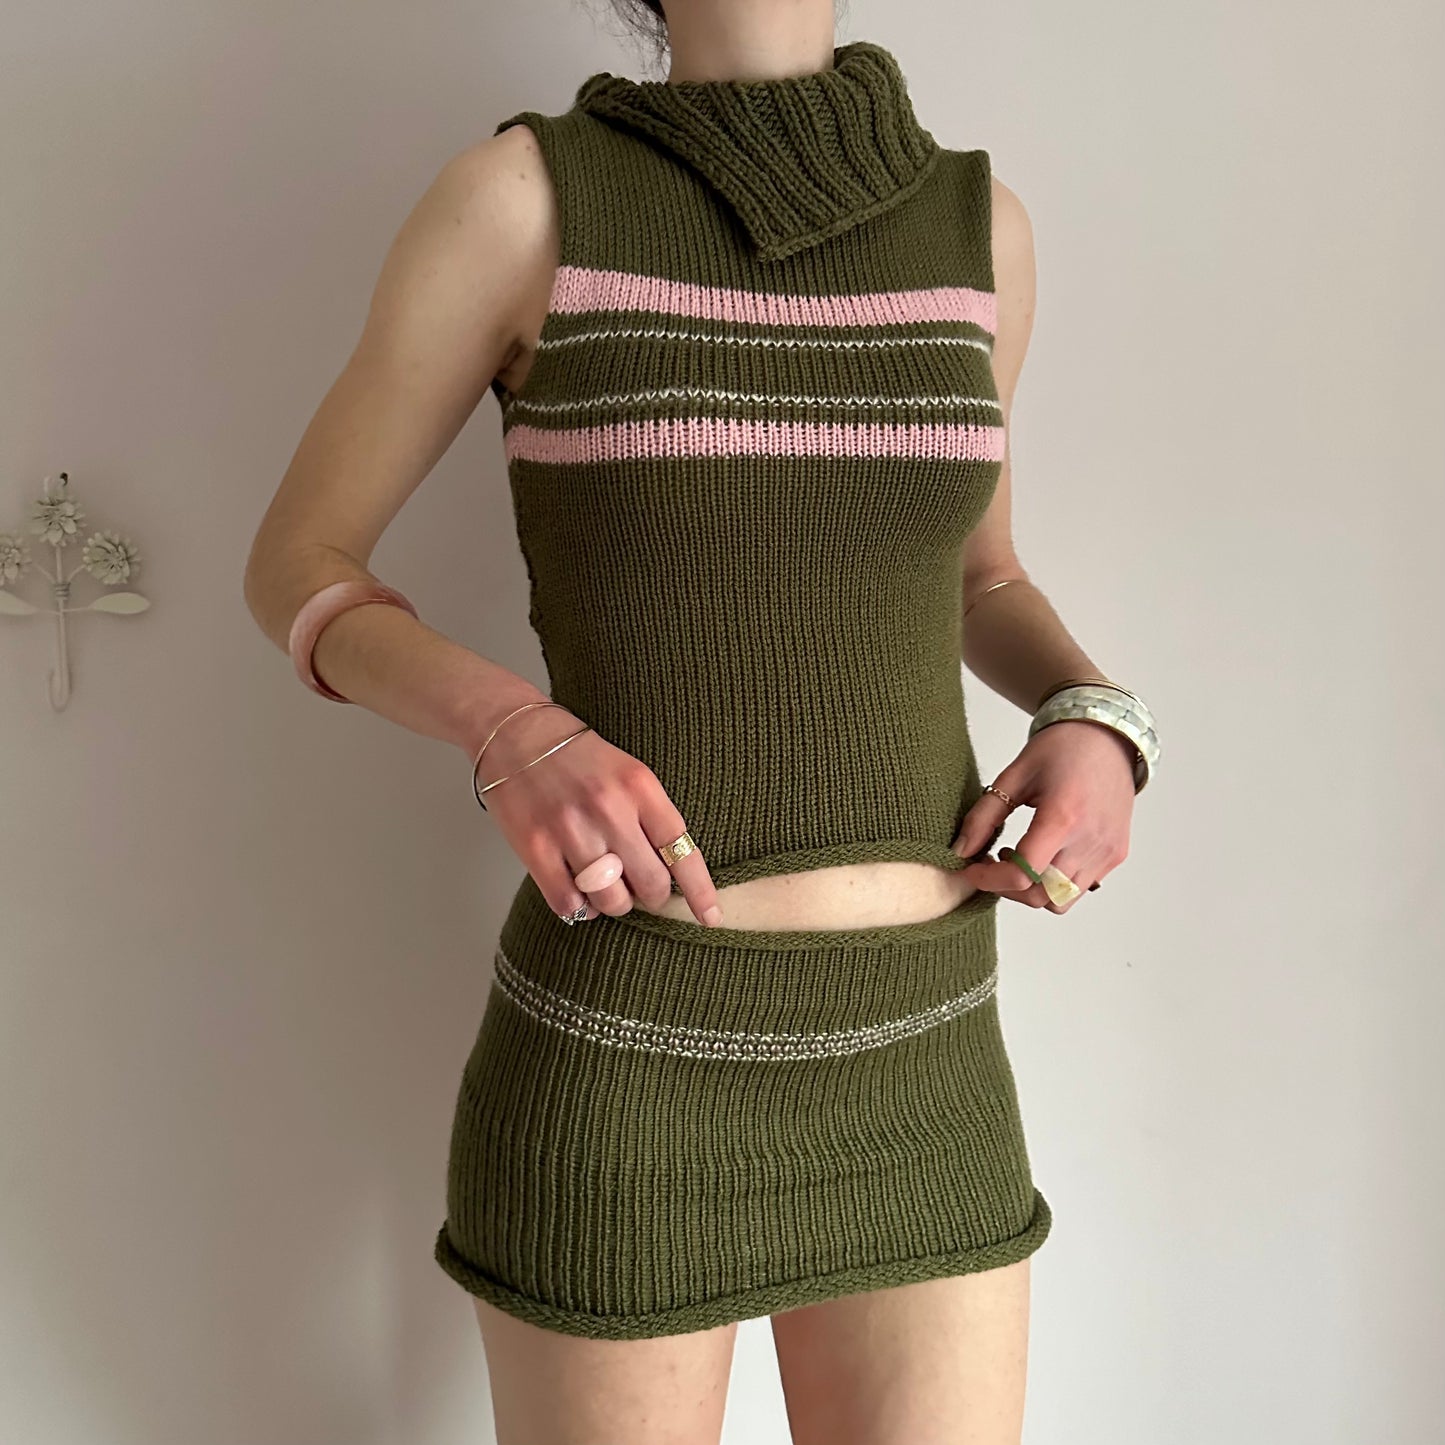 The Jade Set - matching turtleneck knit vest and mini skirt